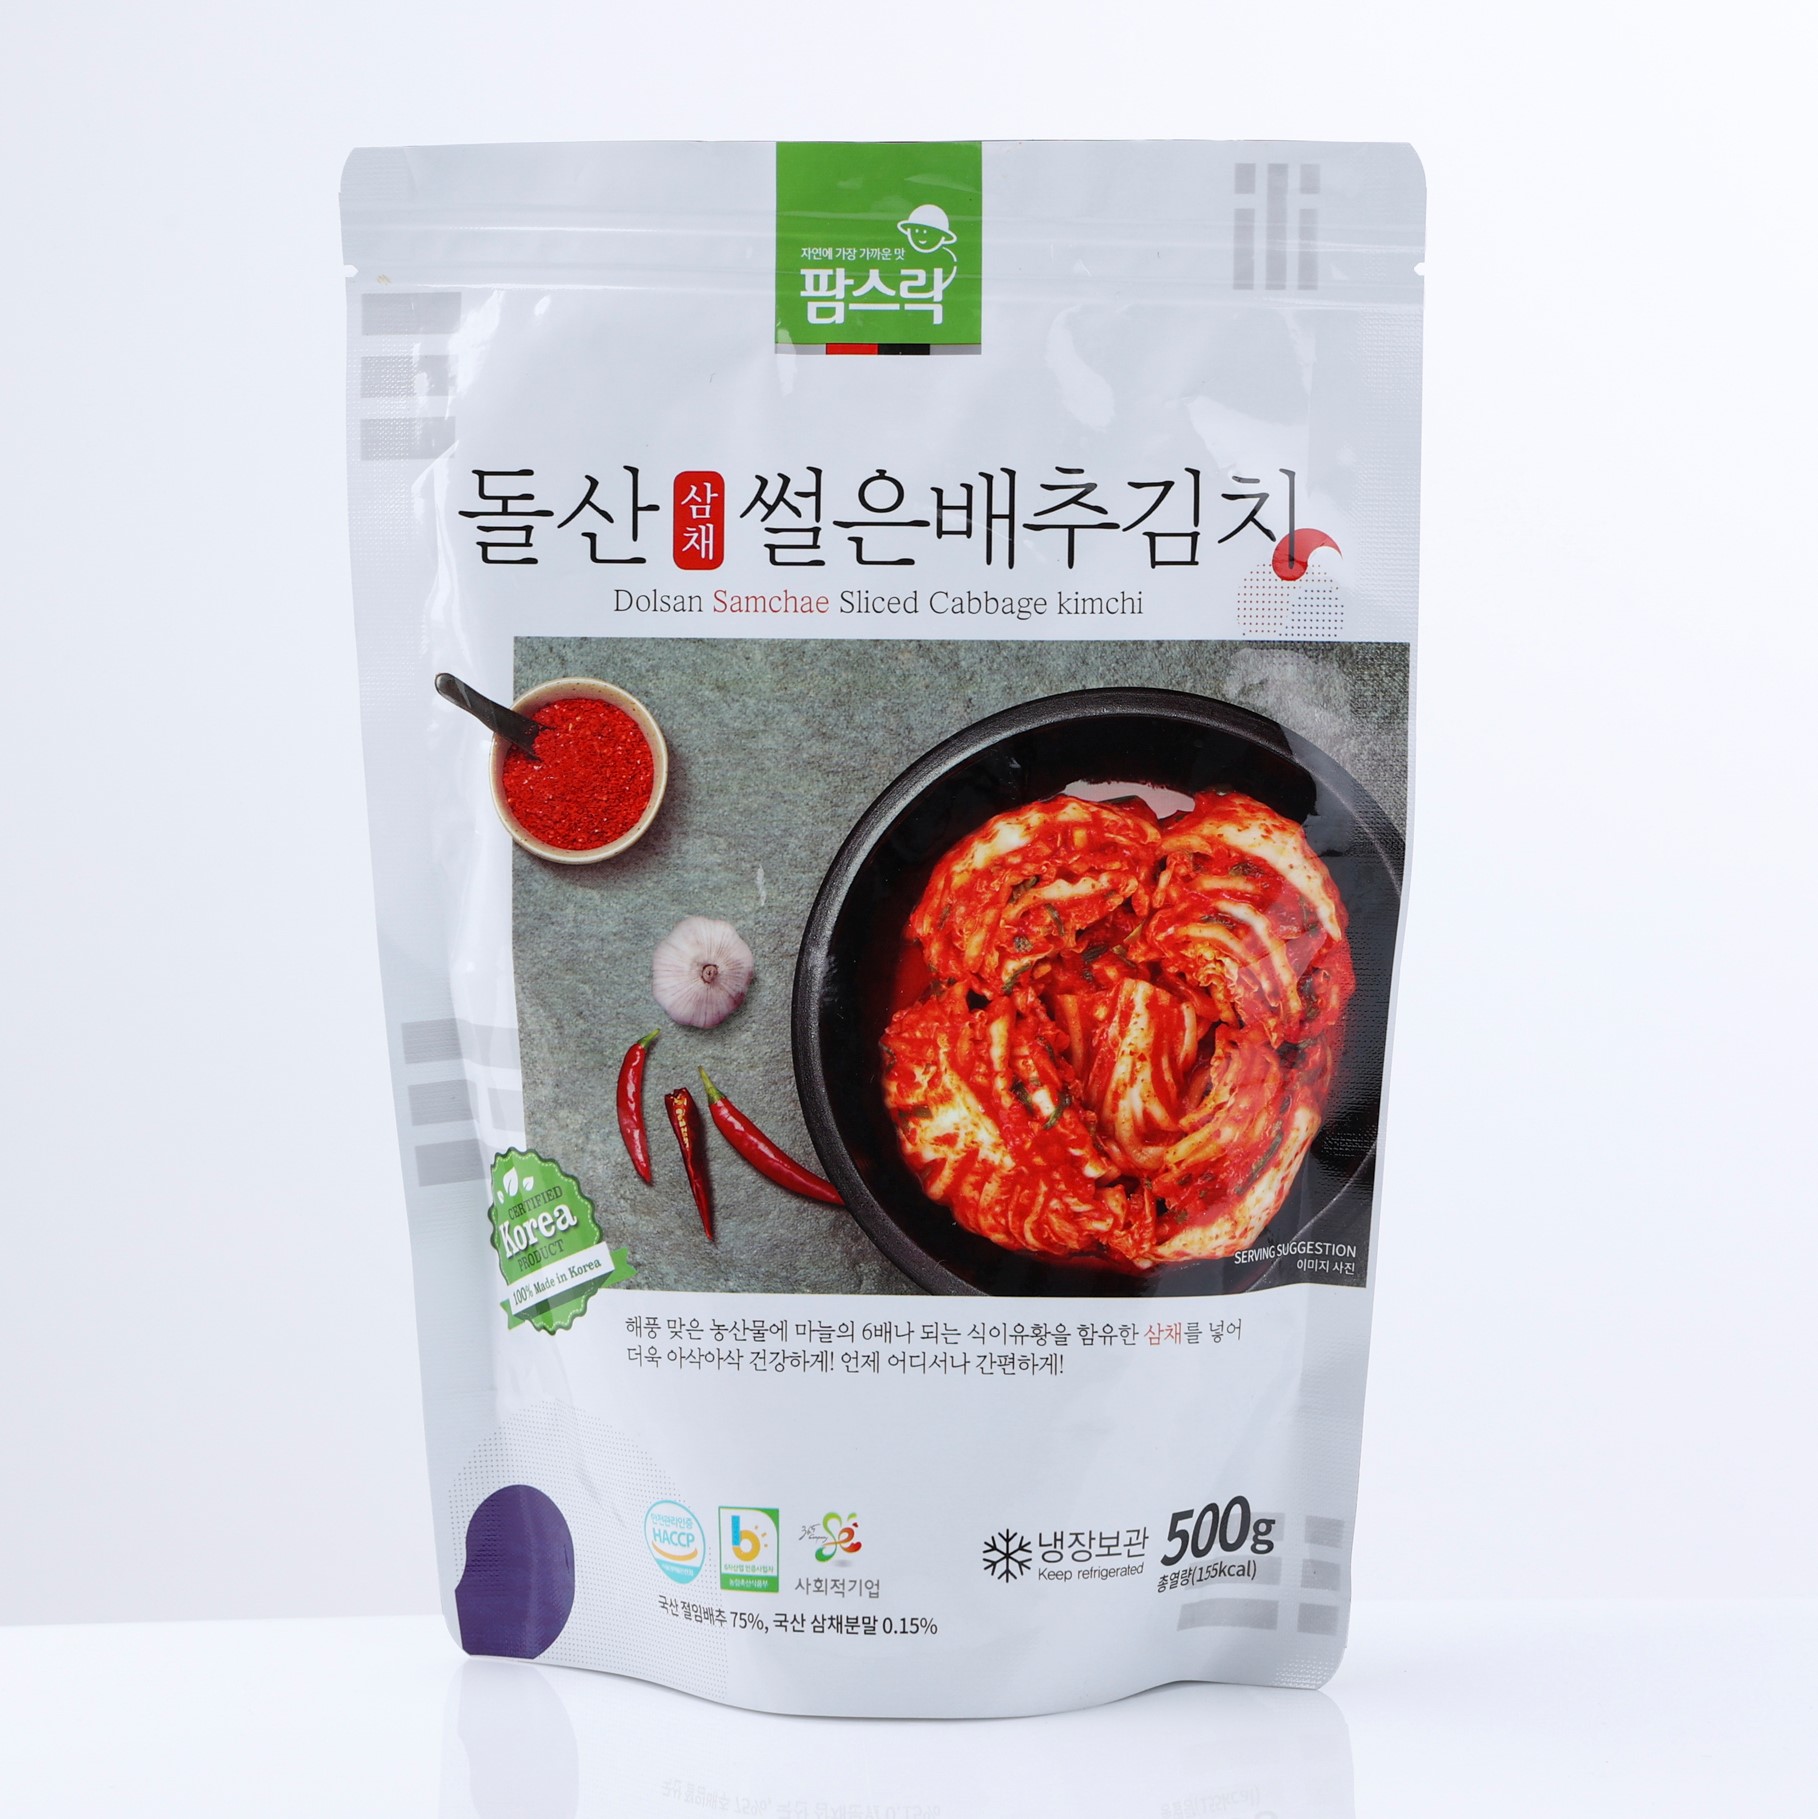 Dolsan Samchae Sliced Cabbage Kimchi